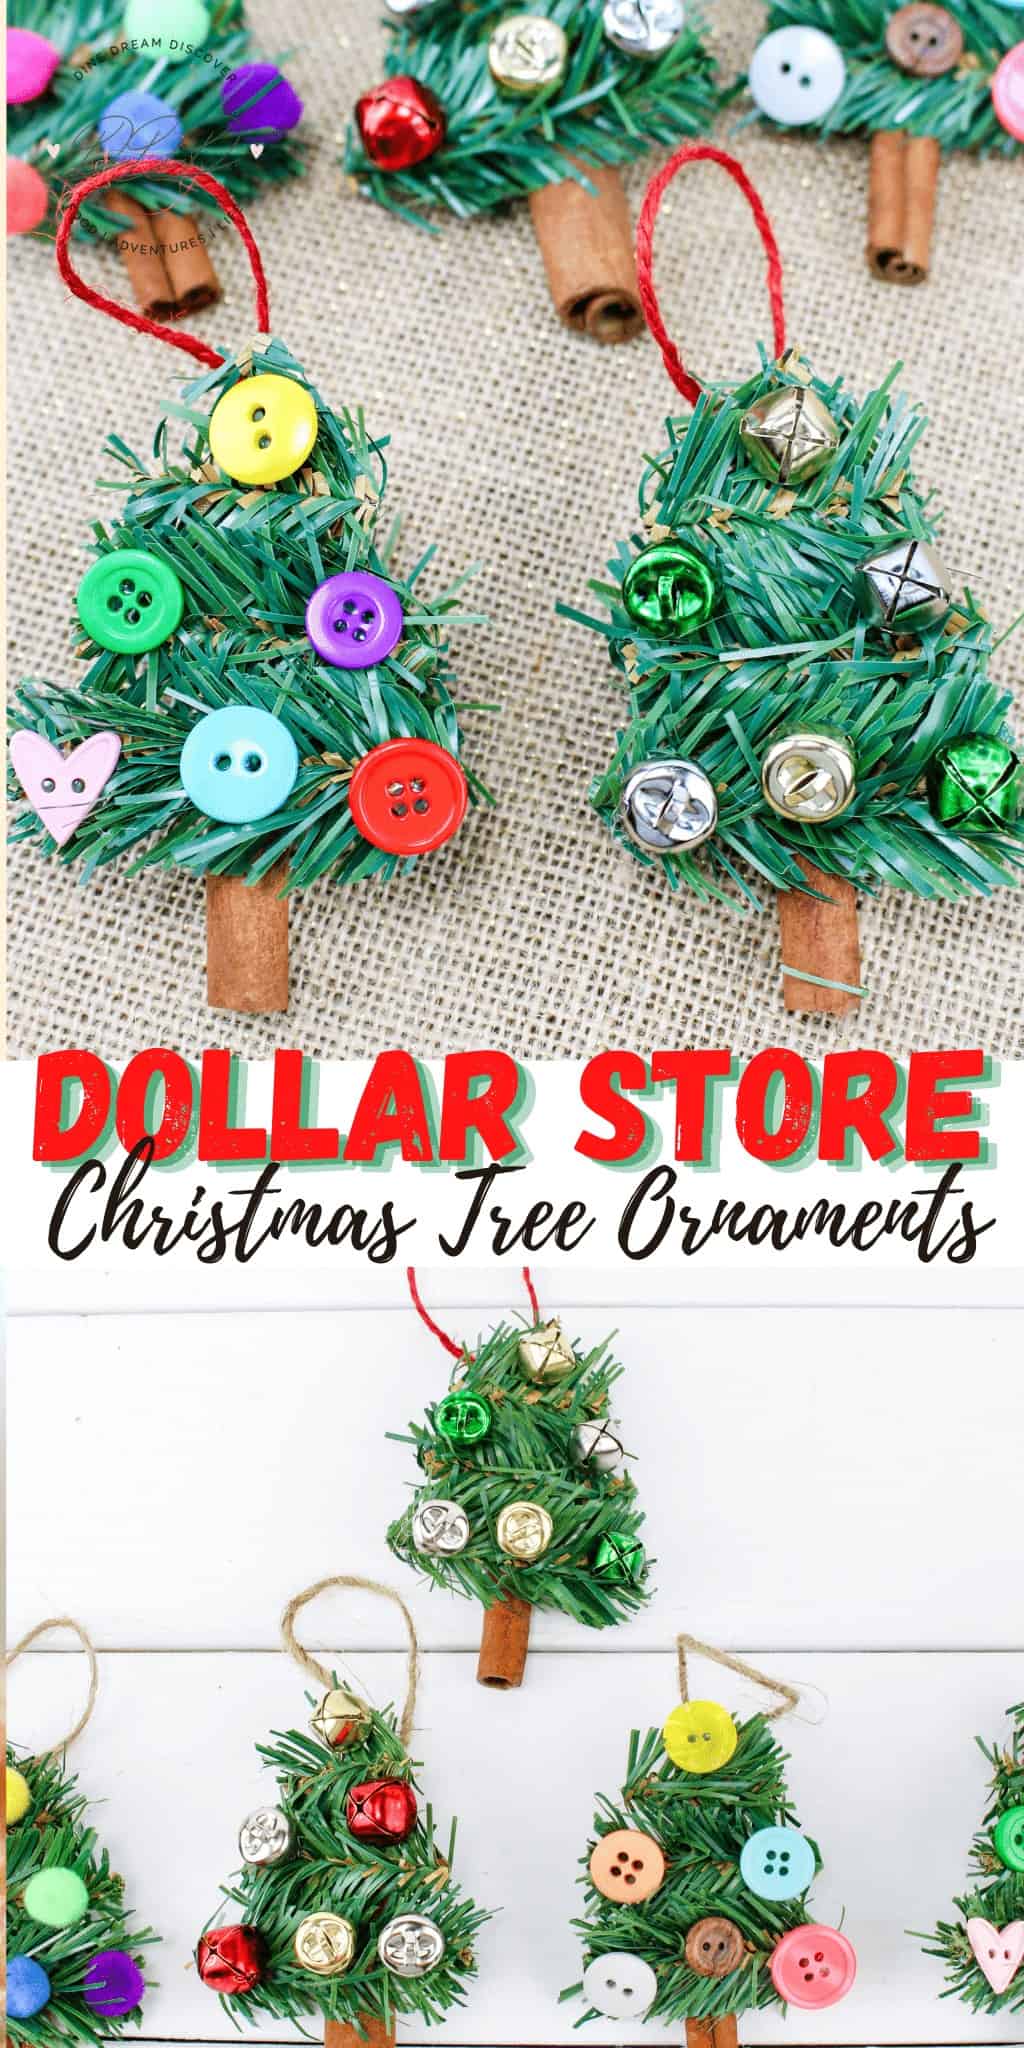 Dollar Store Christmas Tree Ornaments DIY